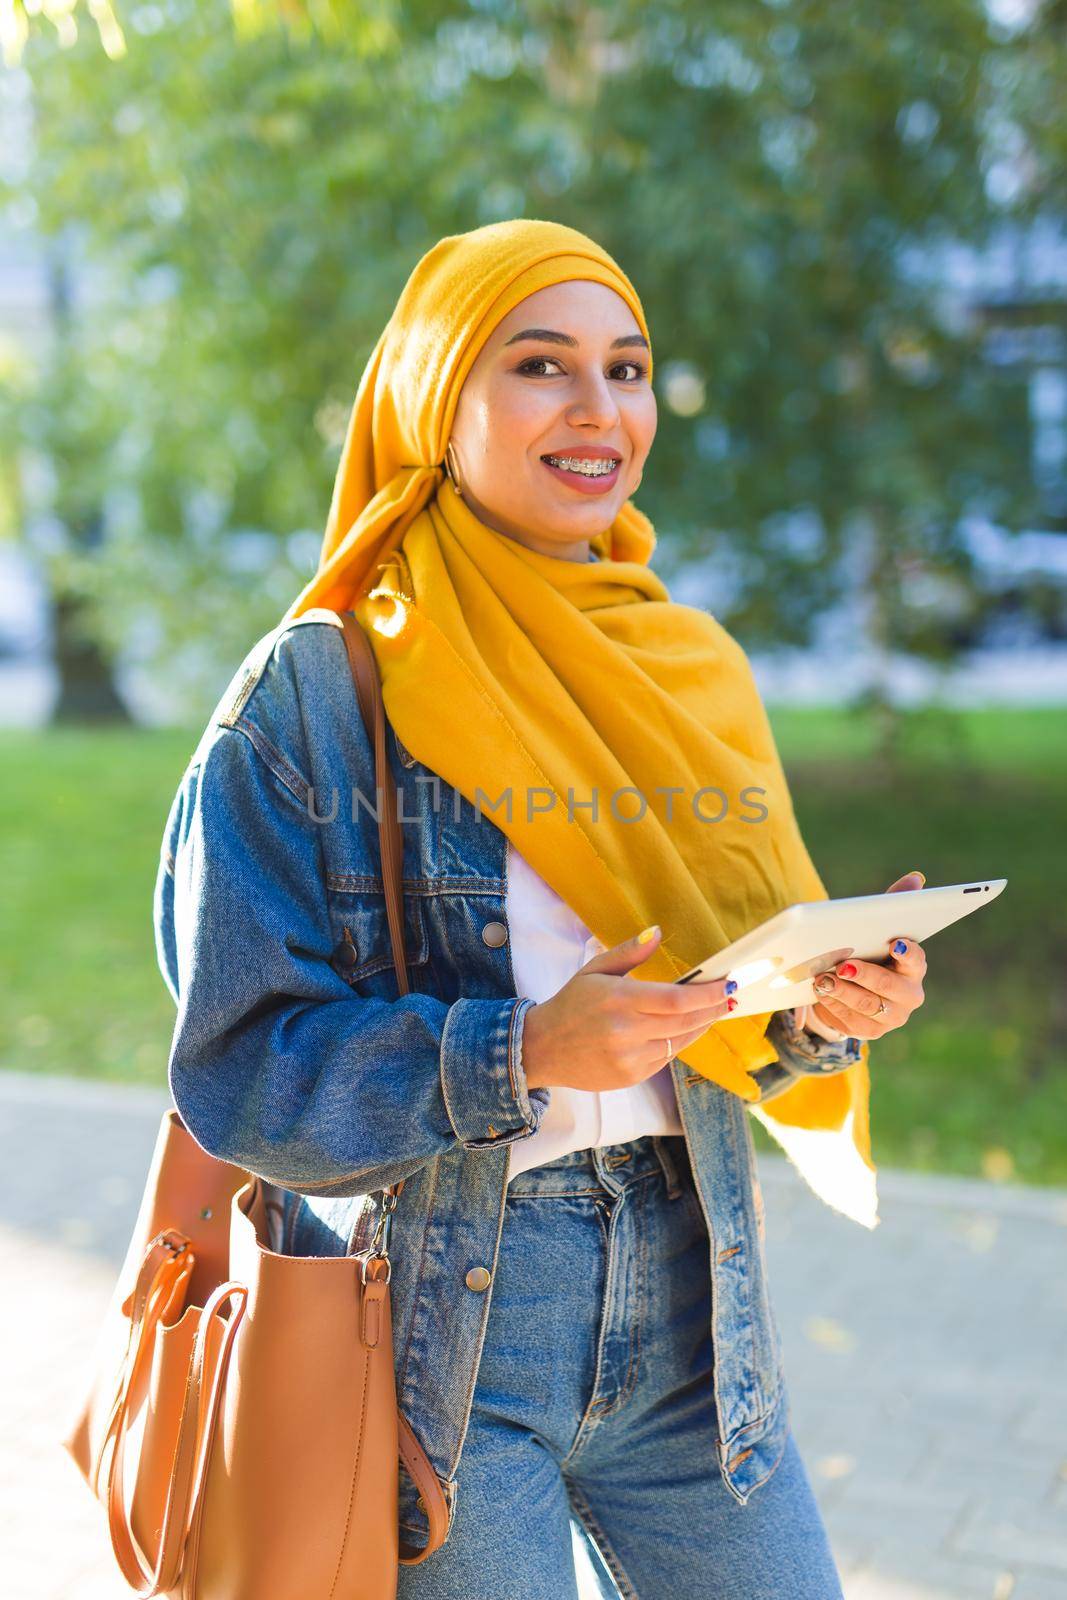 Arab woman student. Beautiful muslim female student wearing yellow hijab holding tablet